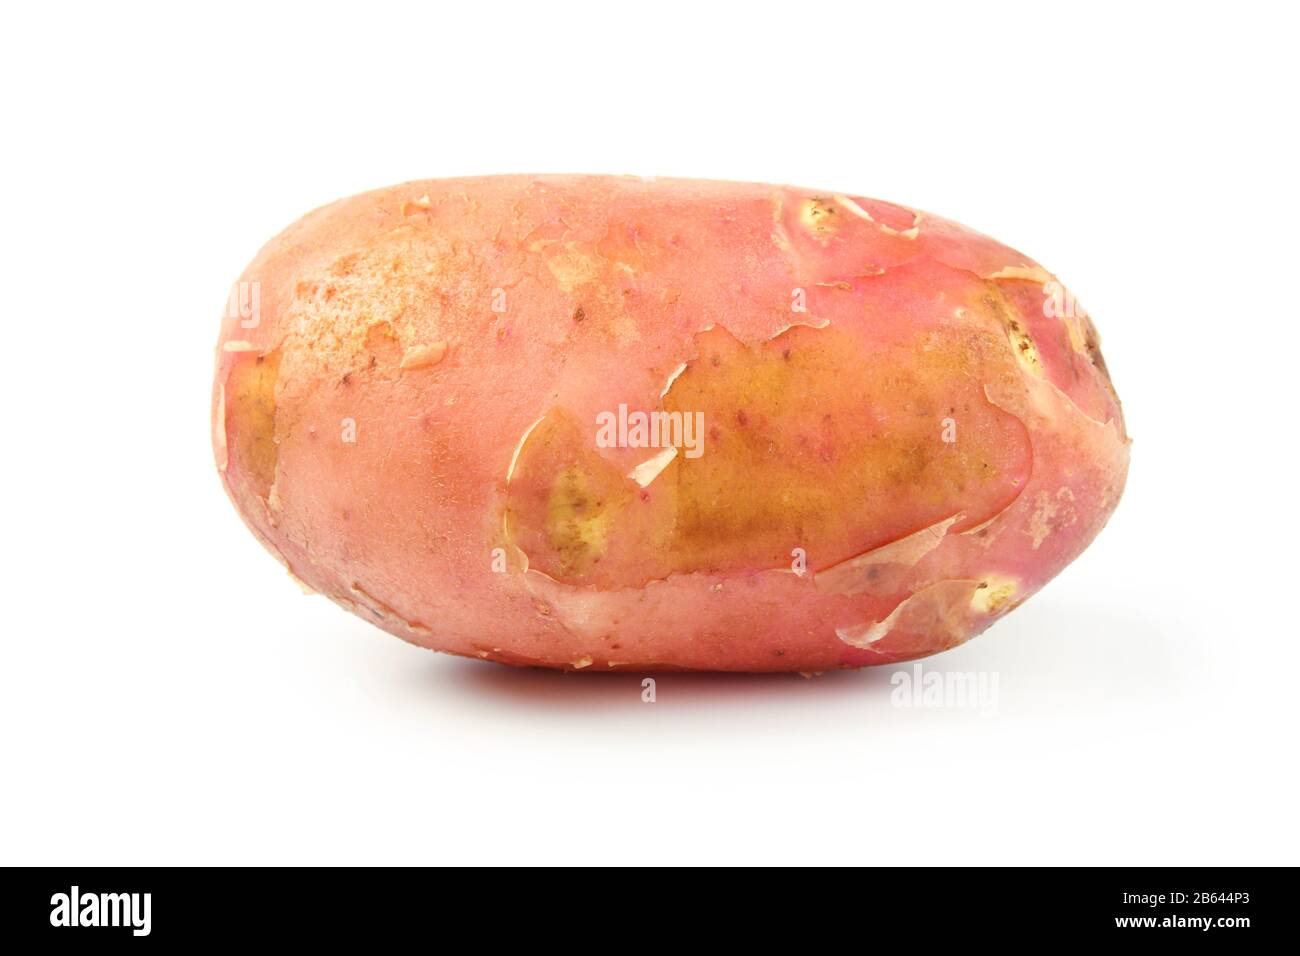 One young potatoe isolated on white background Stock Photo - Alamy